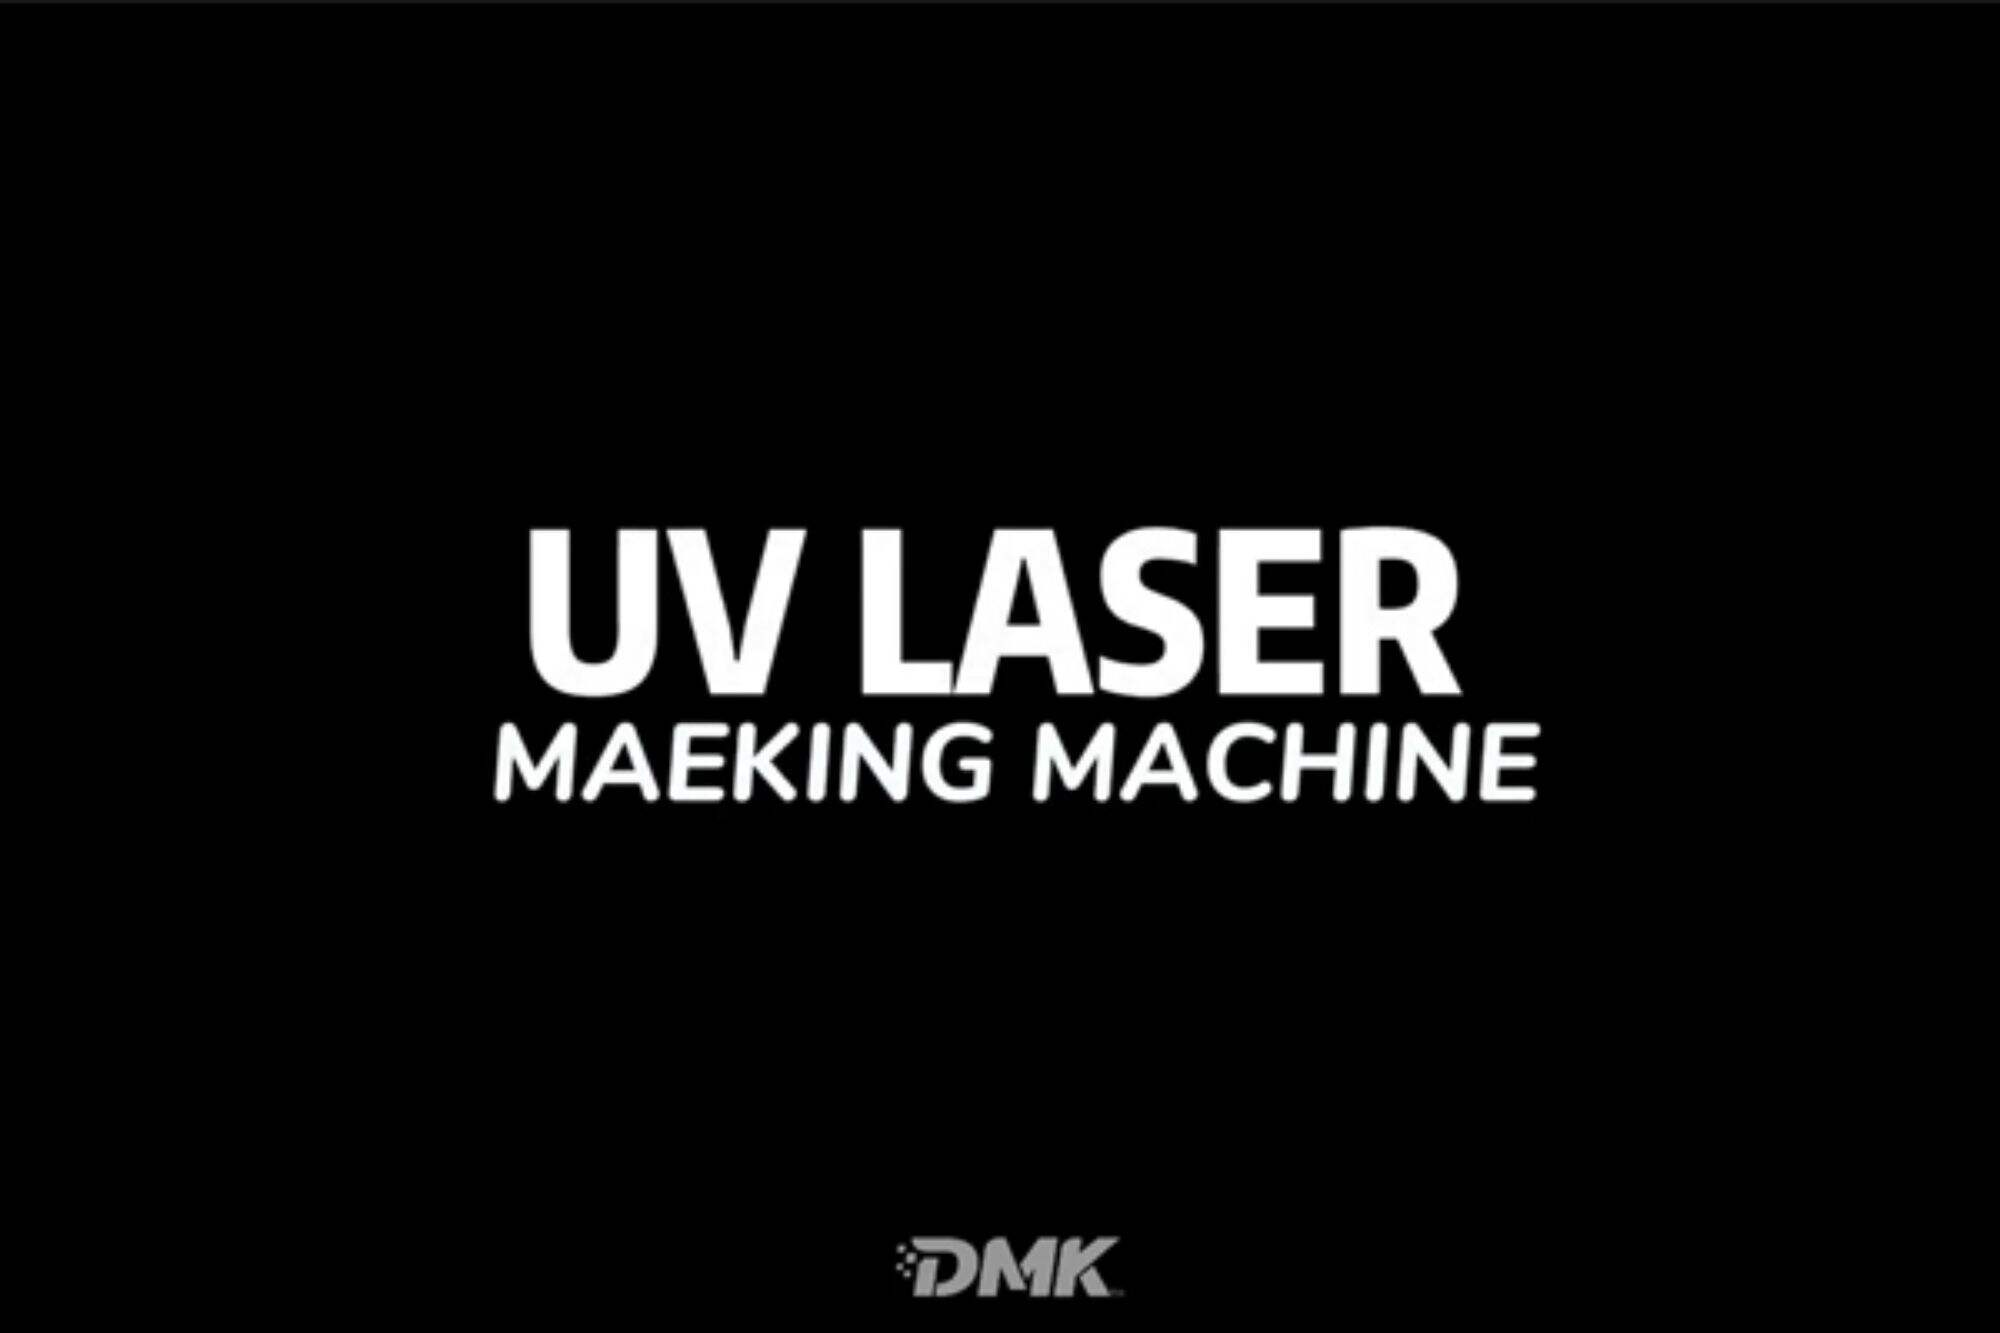 DMK UV-lasermarkeermachine